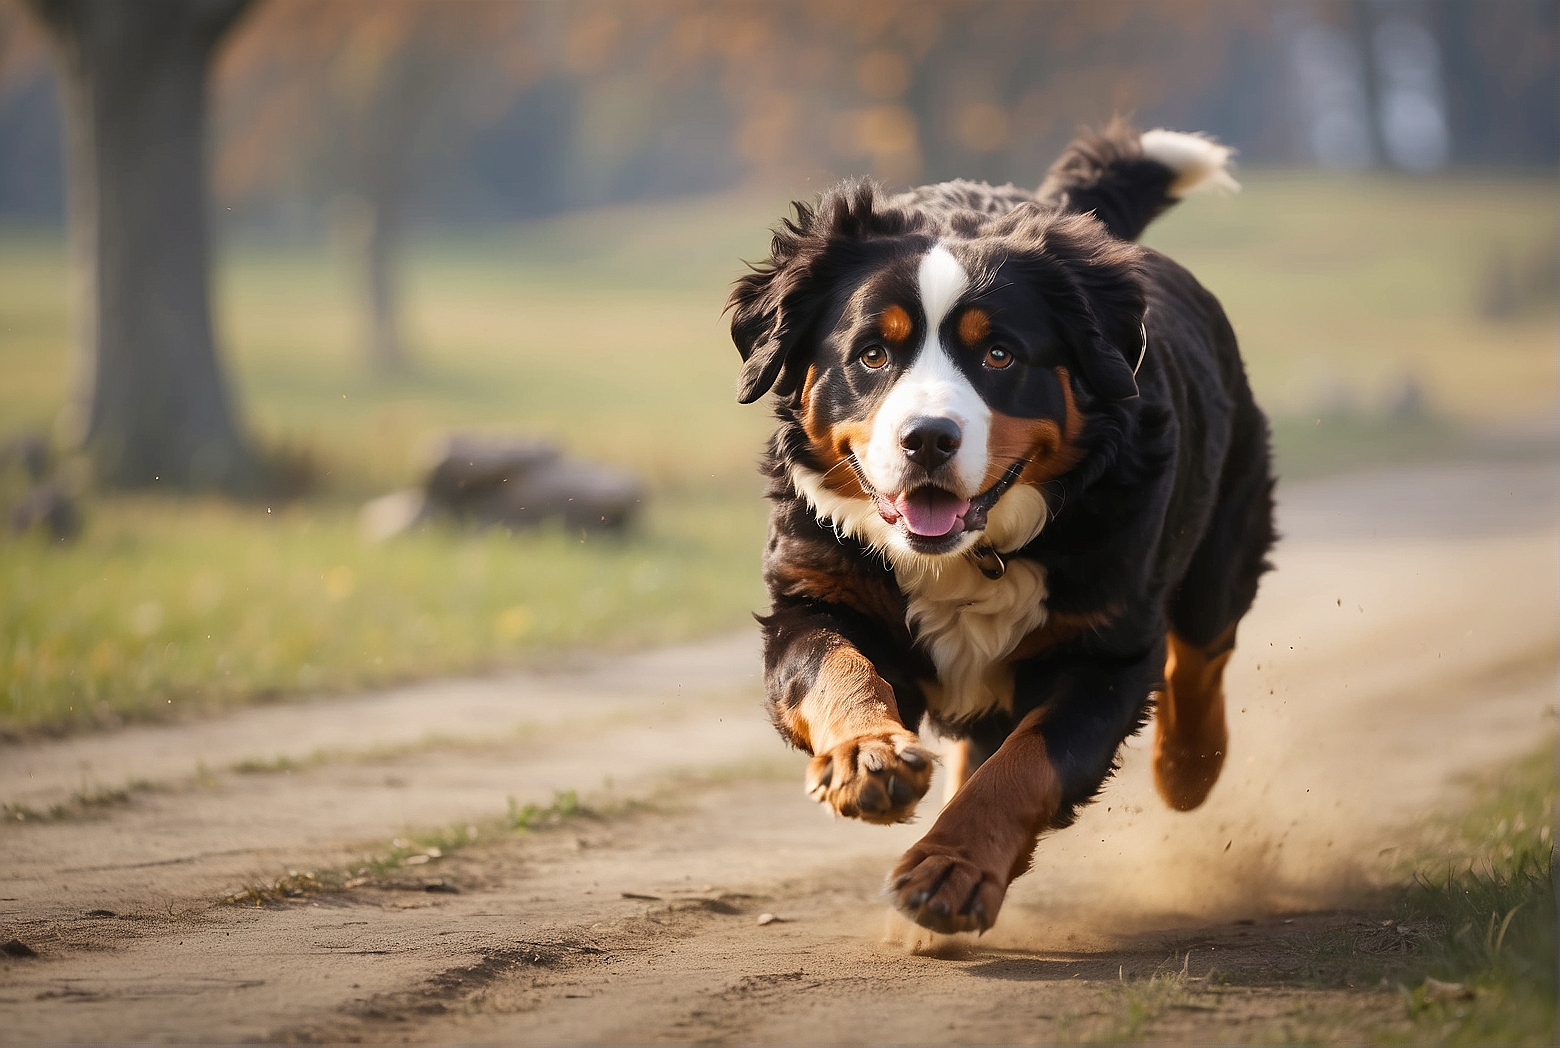 How Fast Can a Bernese Mountain Dog Run